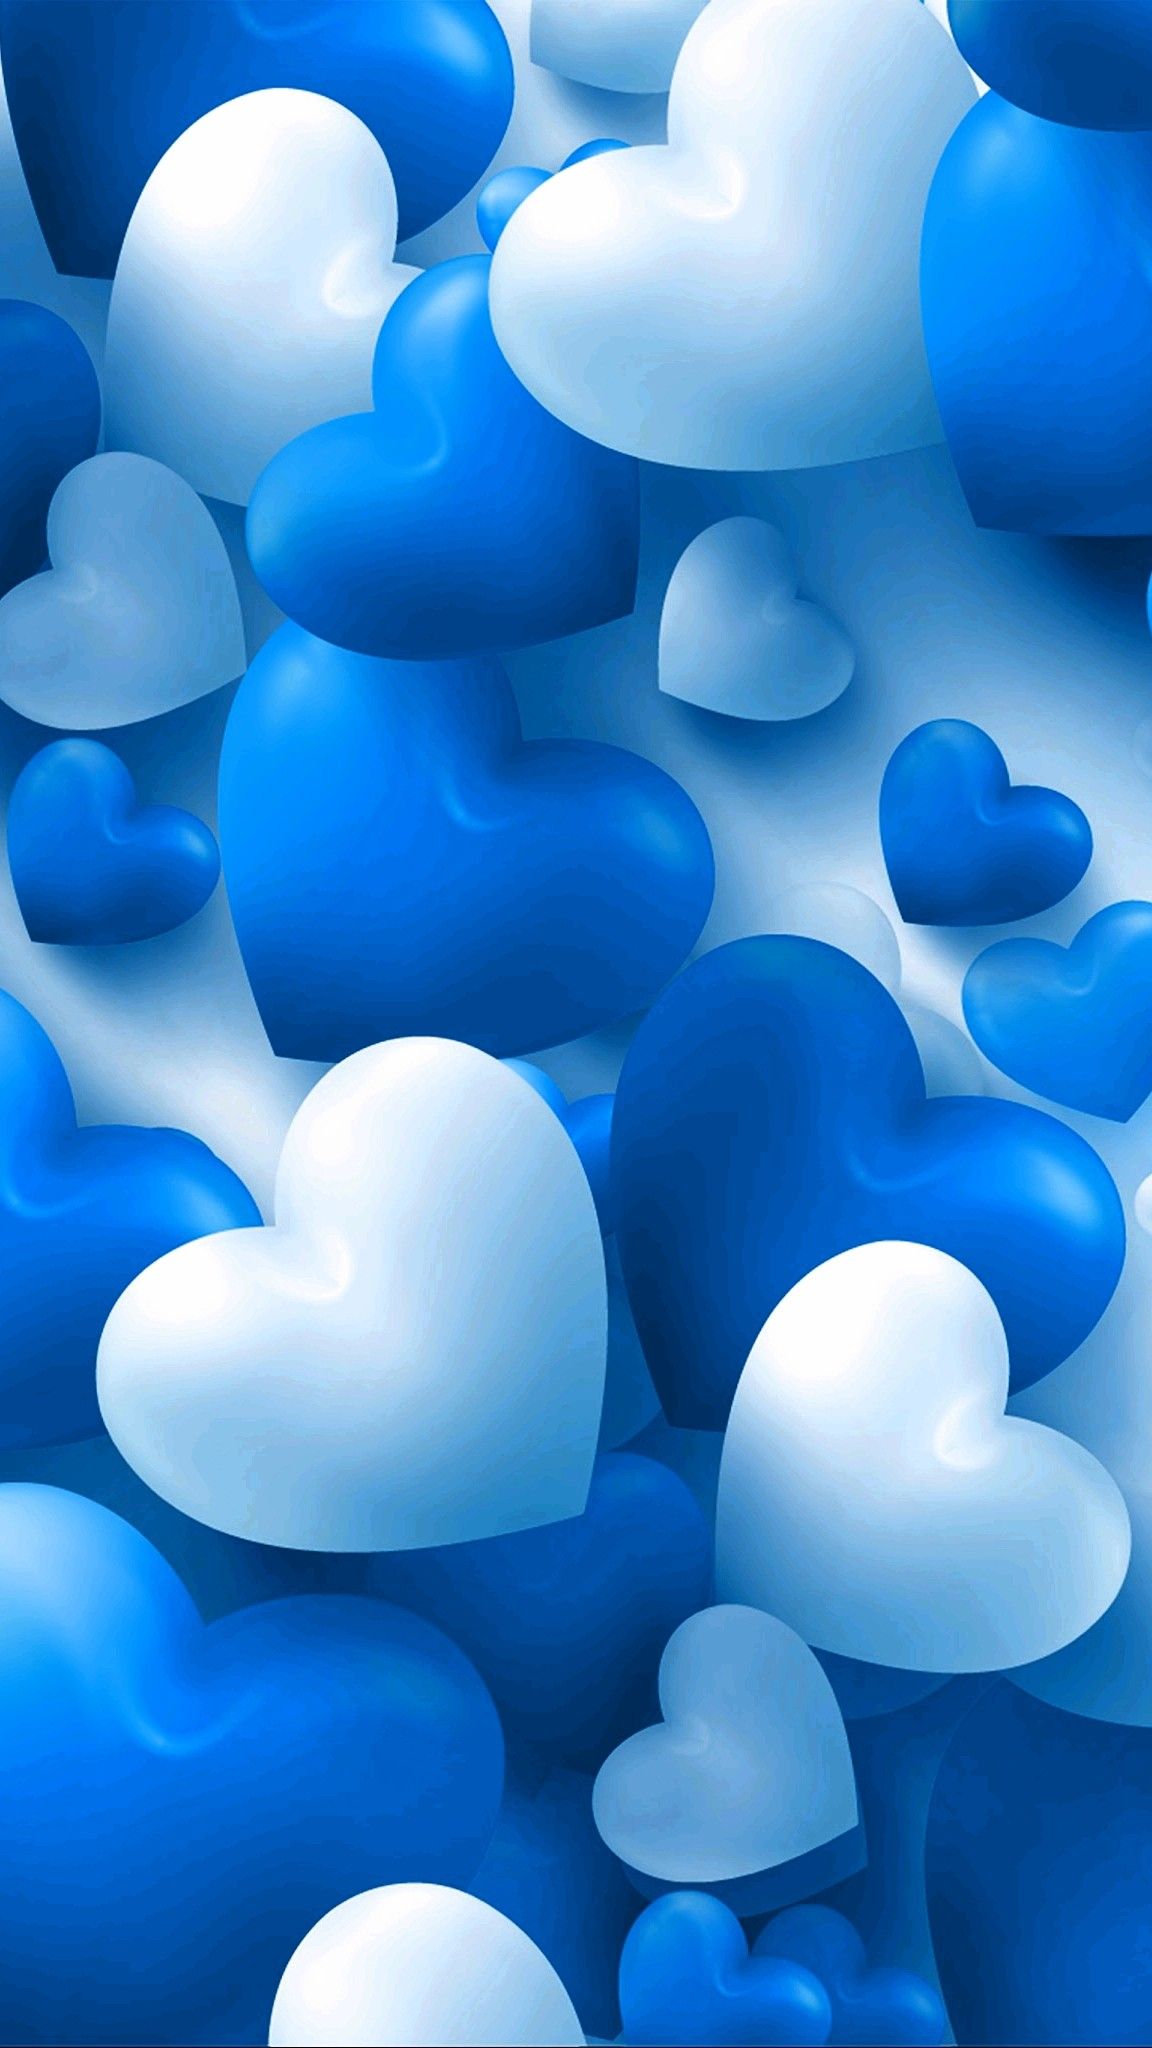 background blue love